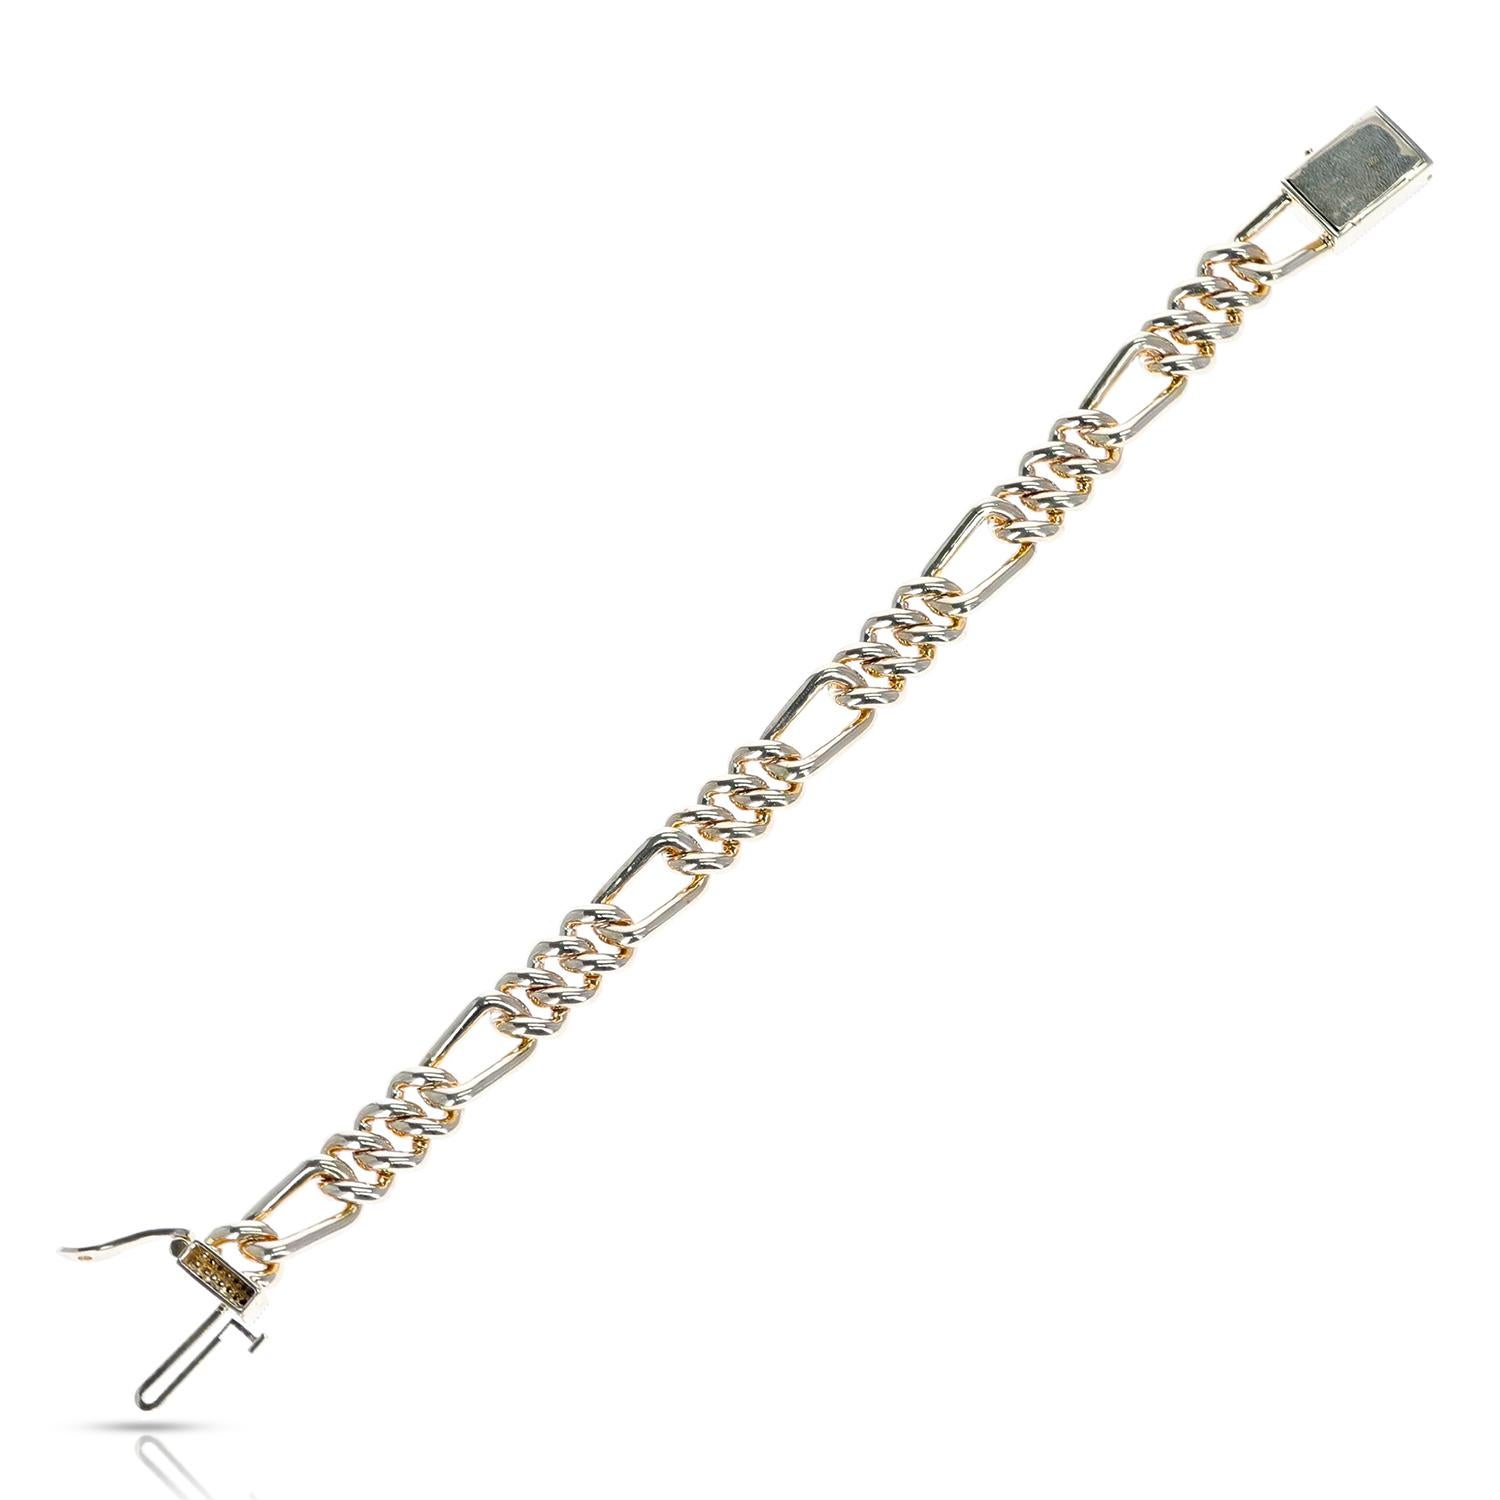 cuban link bracelet with diamond lock